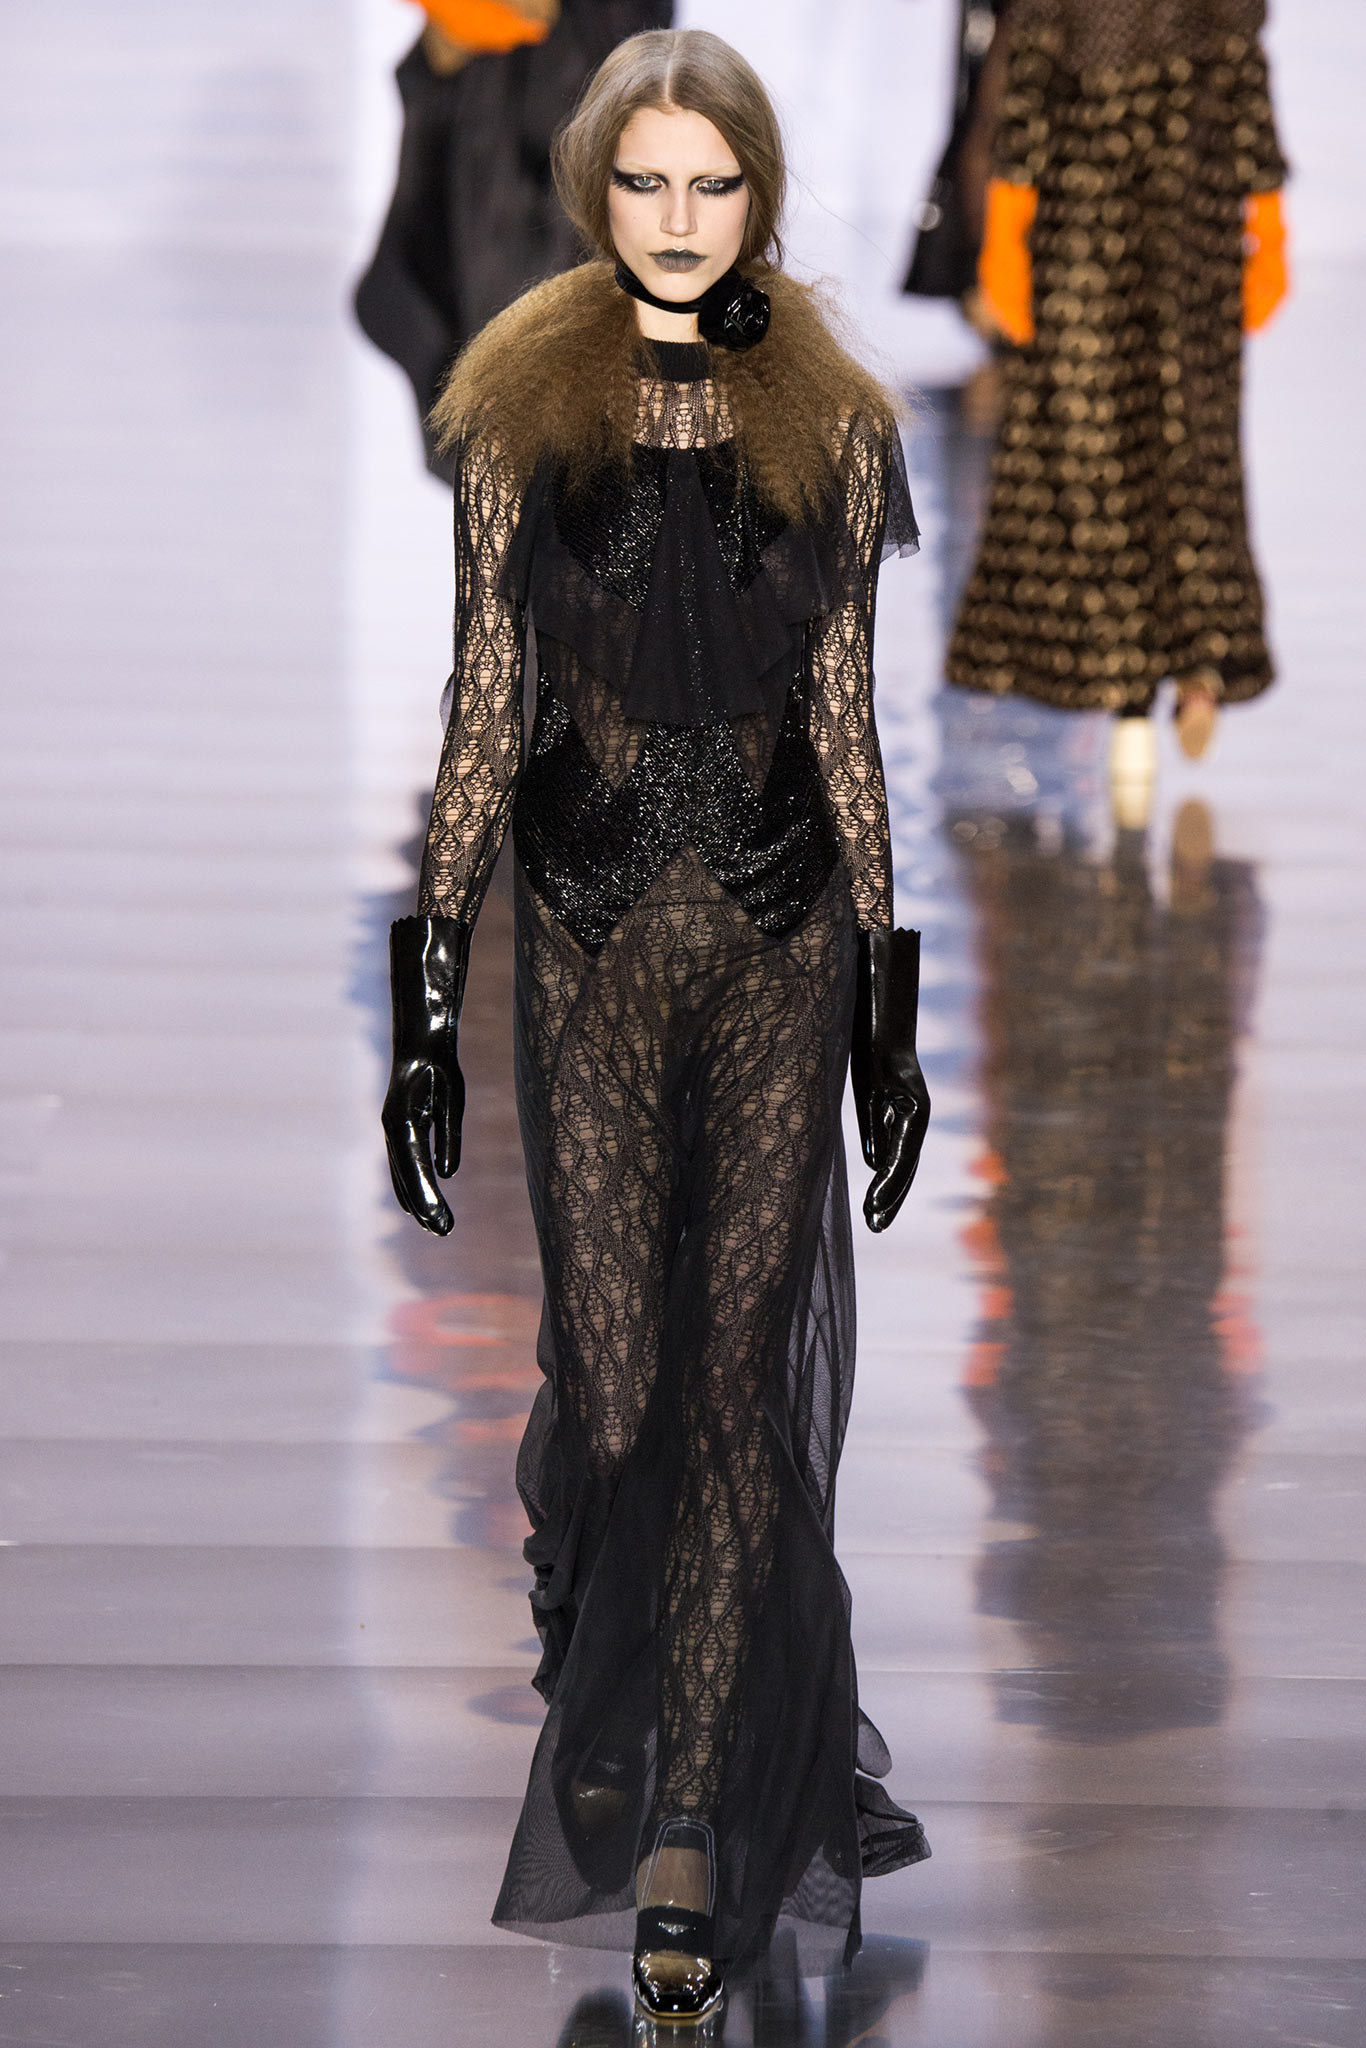 Naomi Campbell In Maison Margiela At amfAR Milano 2015